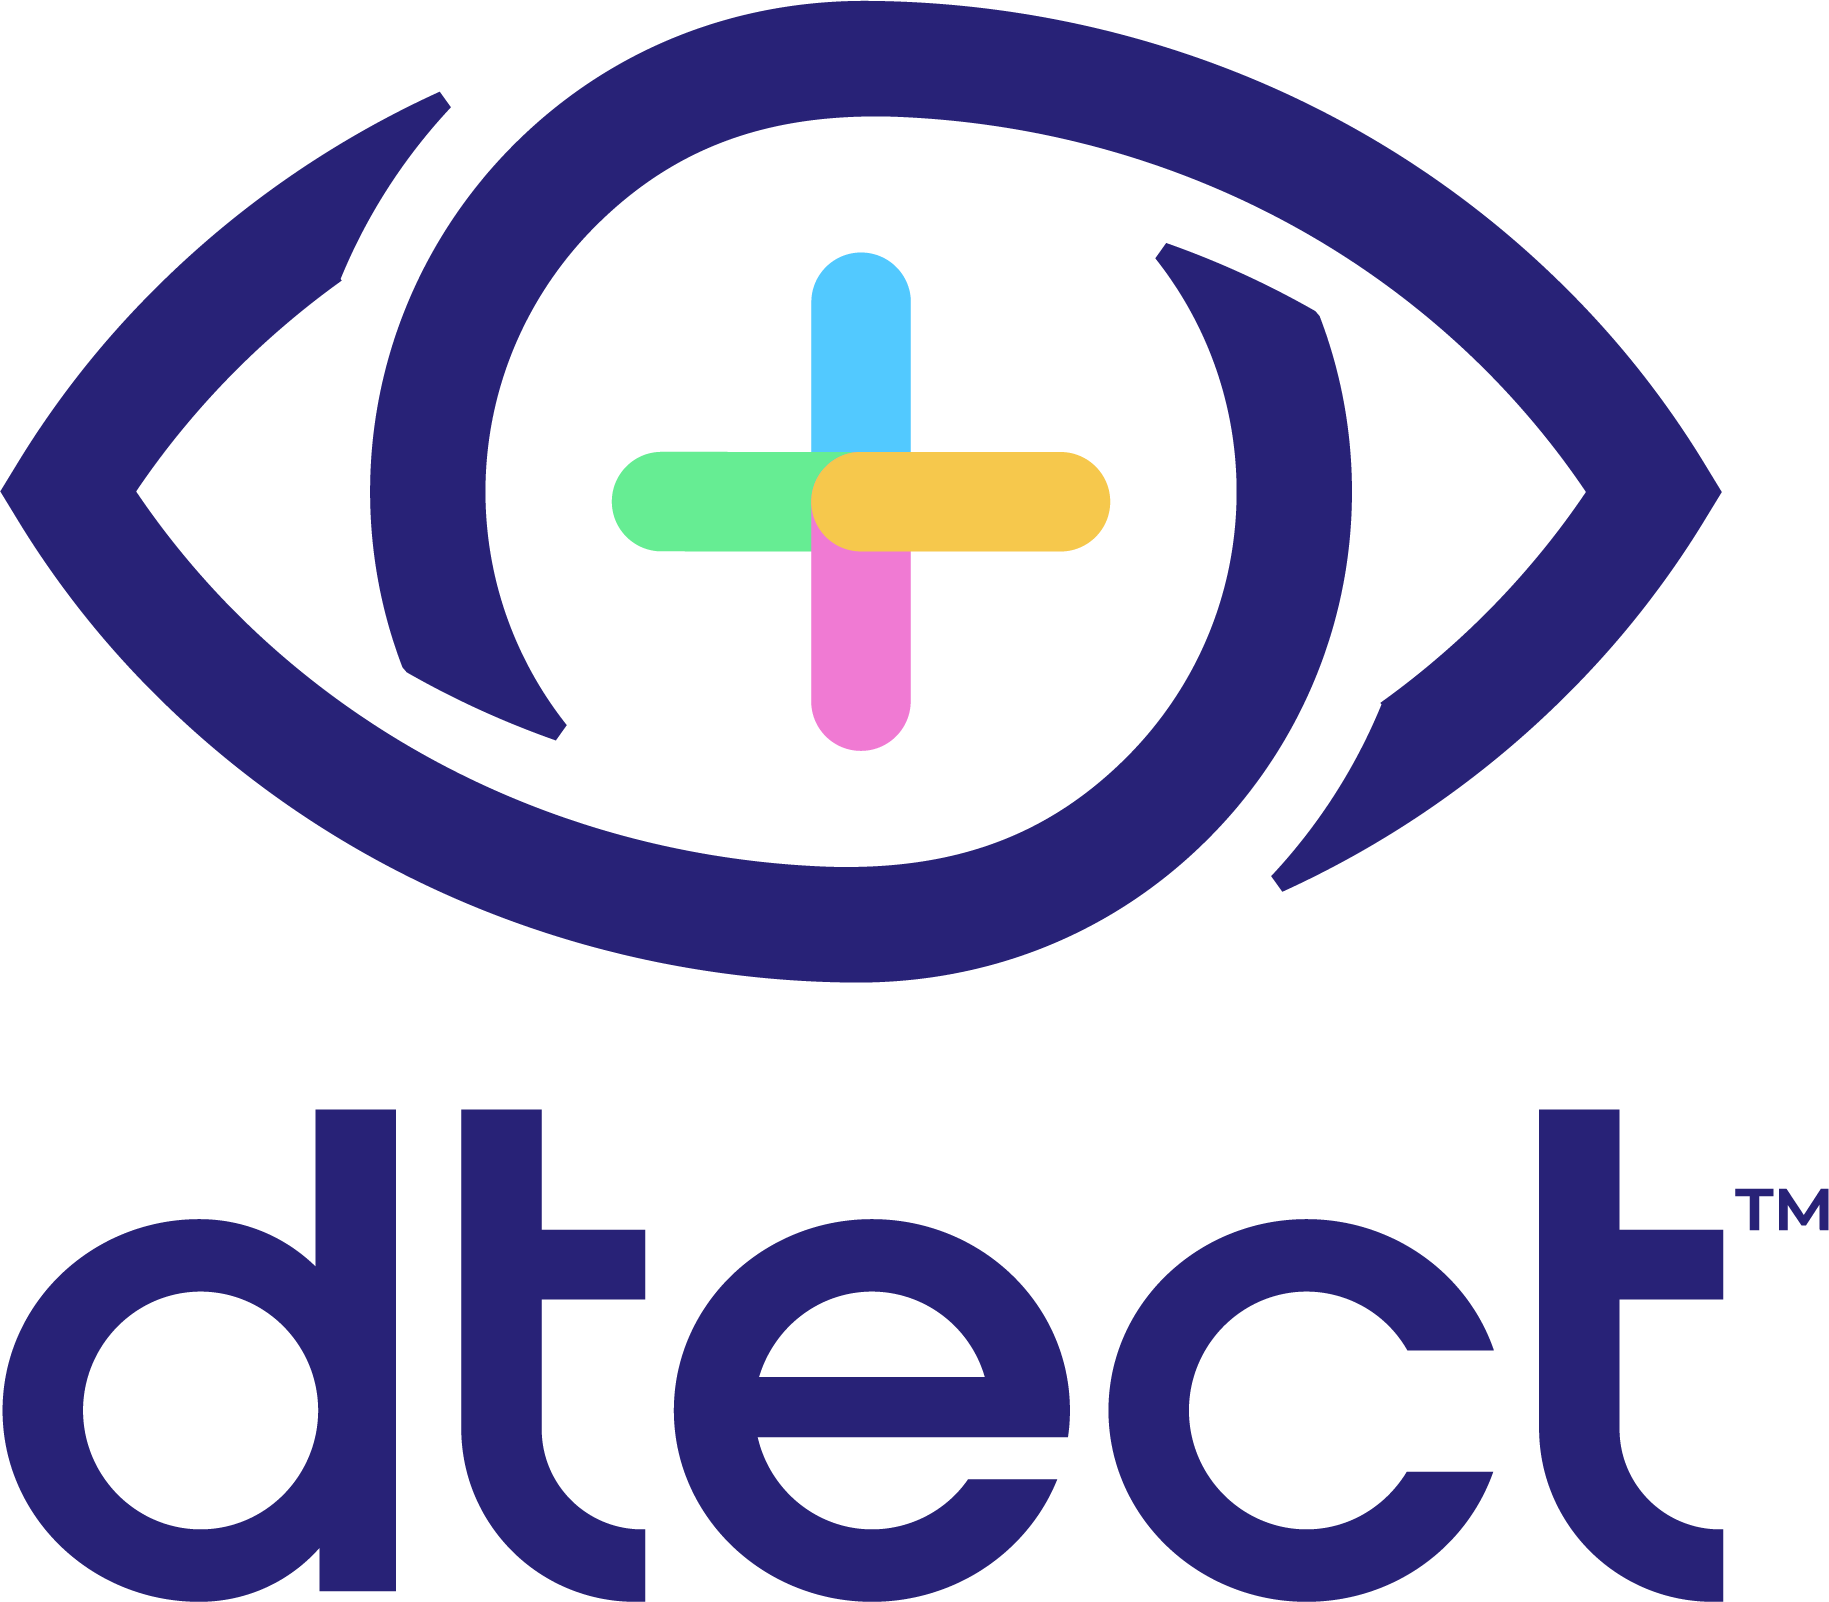 dtect logo on white background.